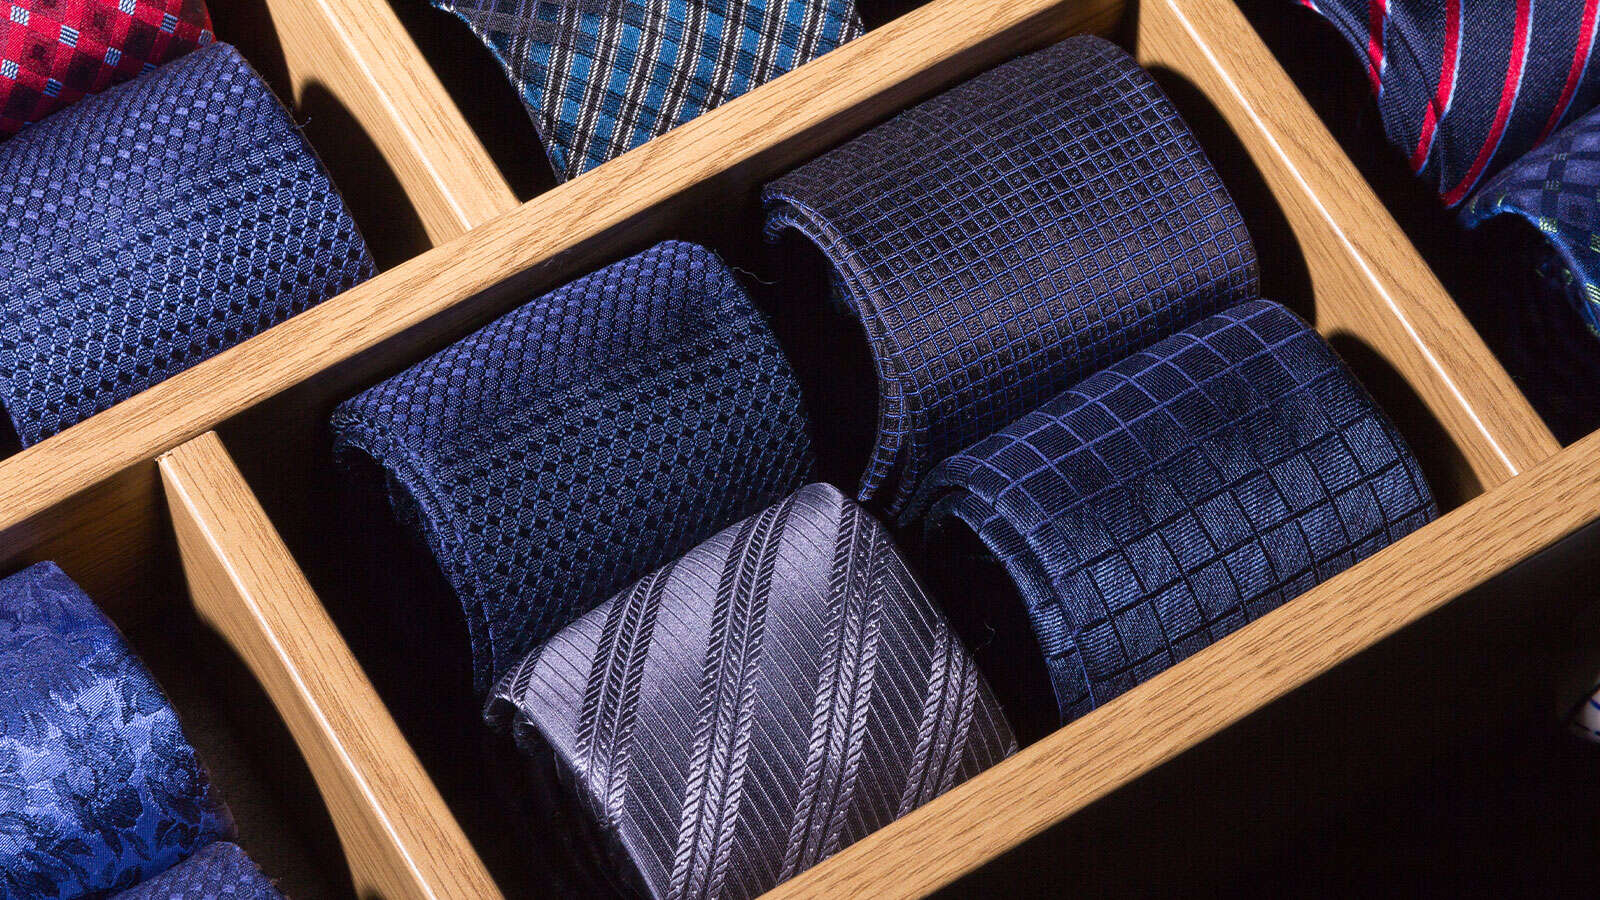 The timeless elegance of silk ties